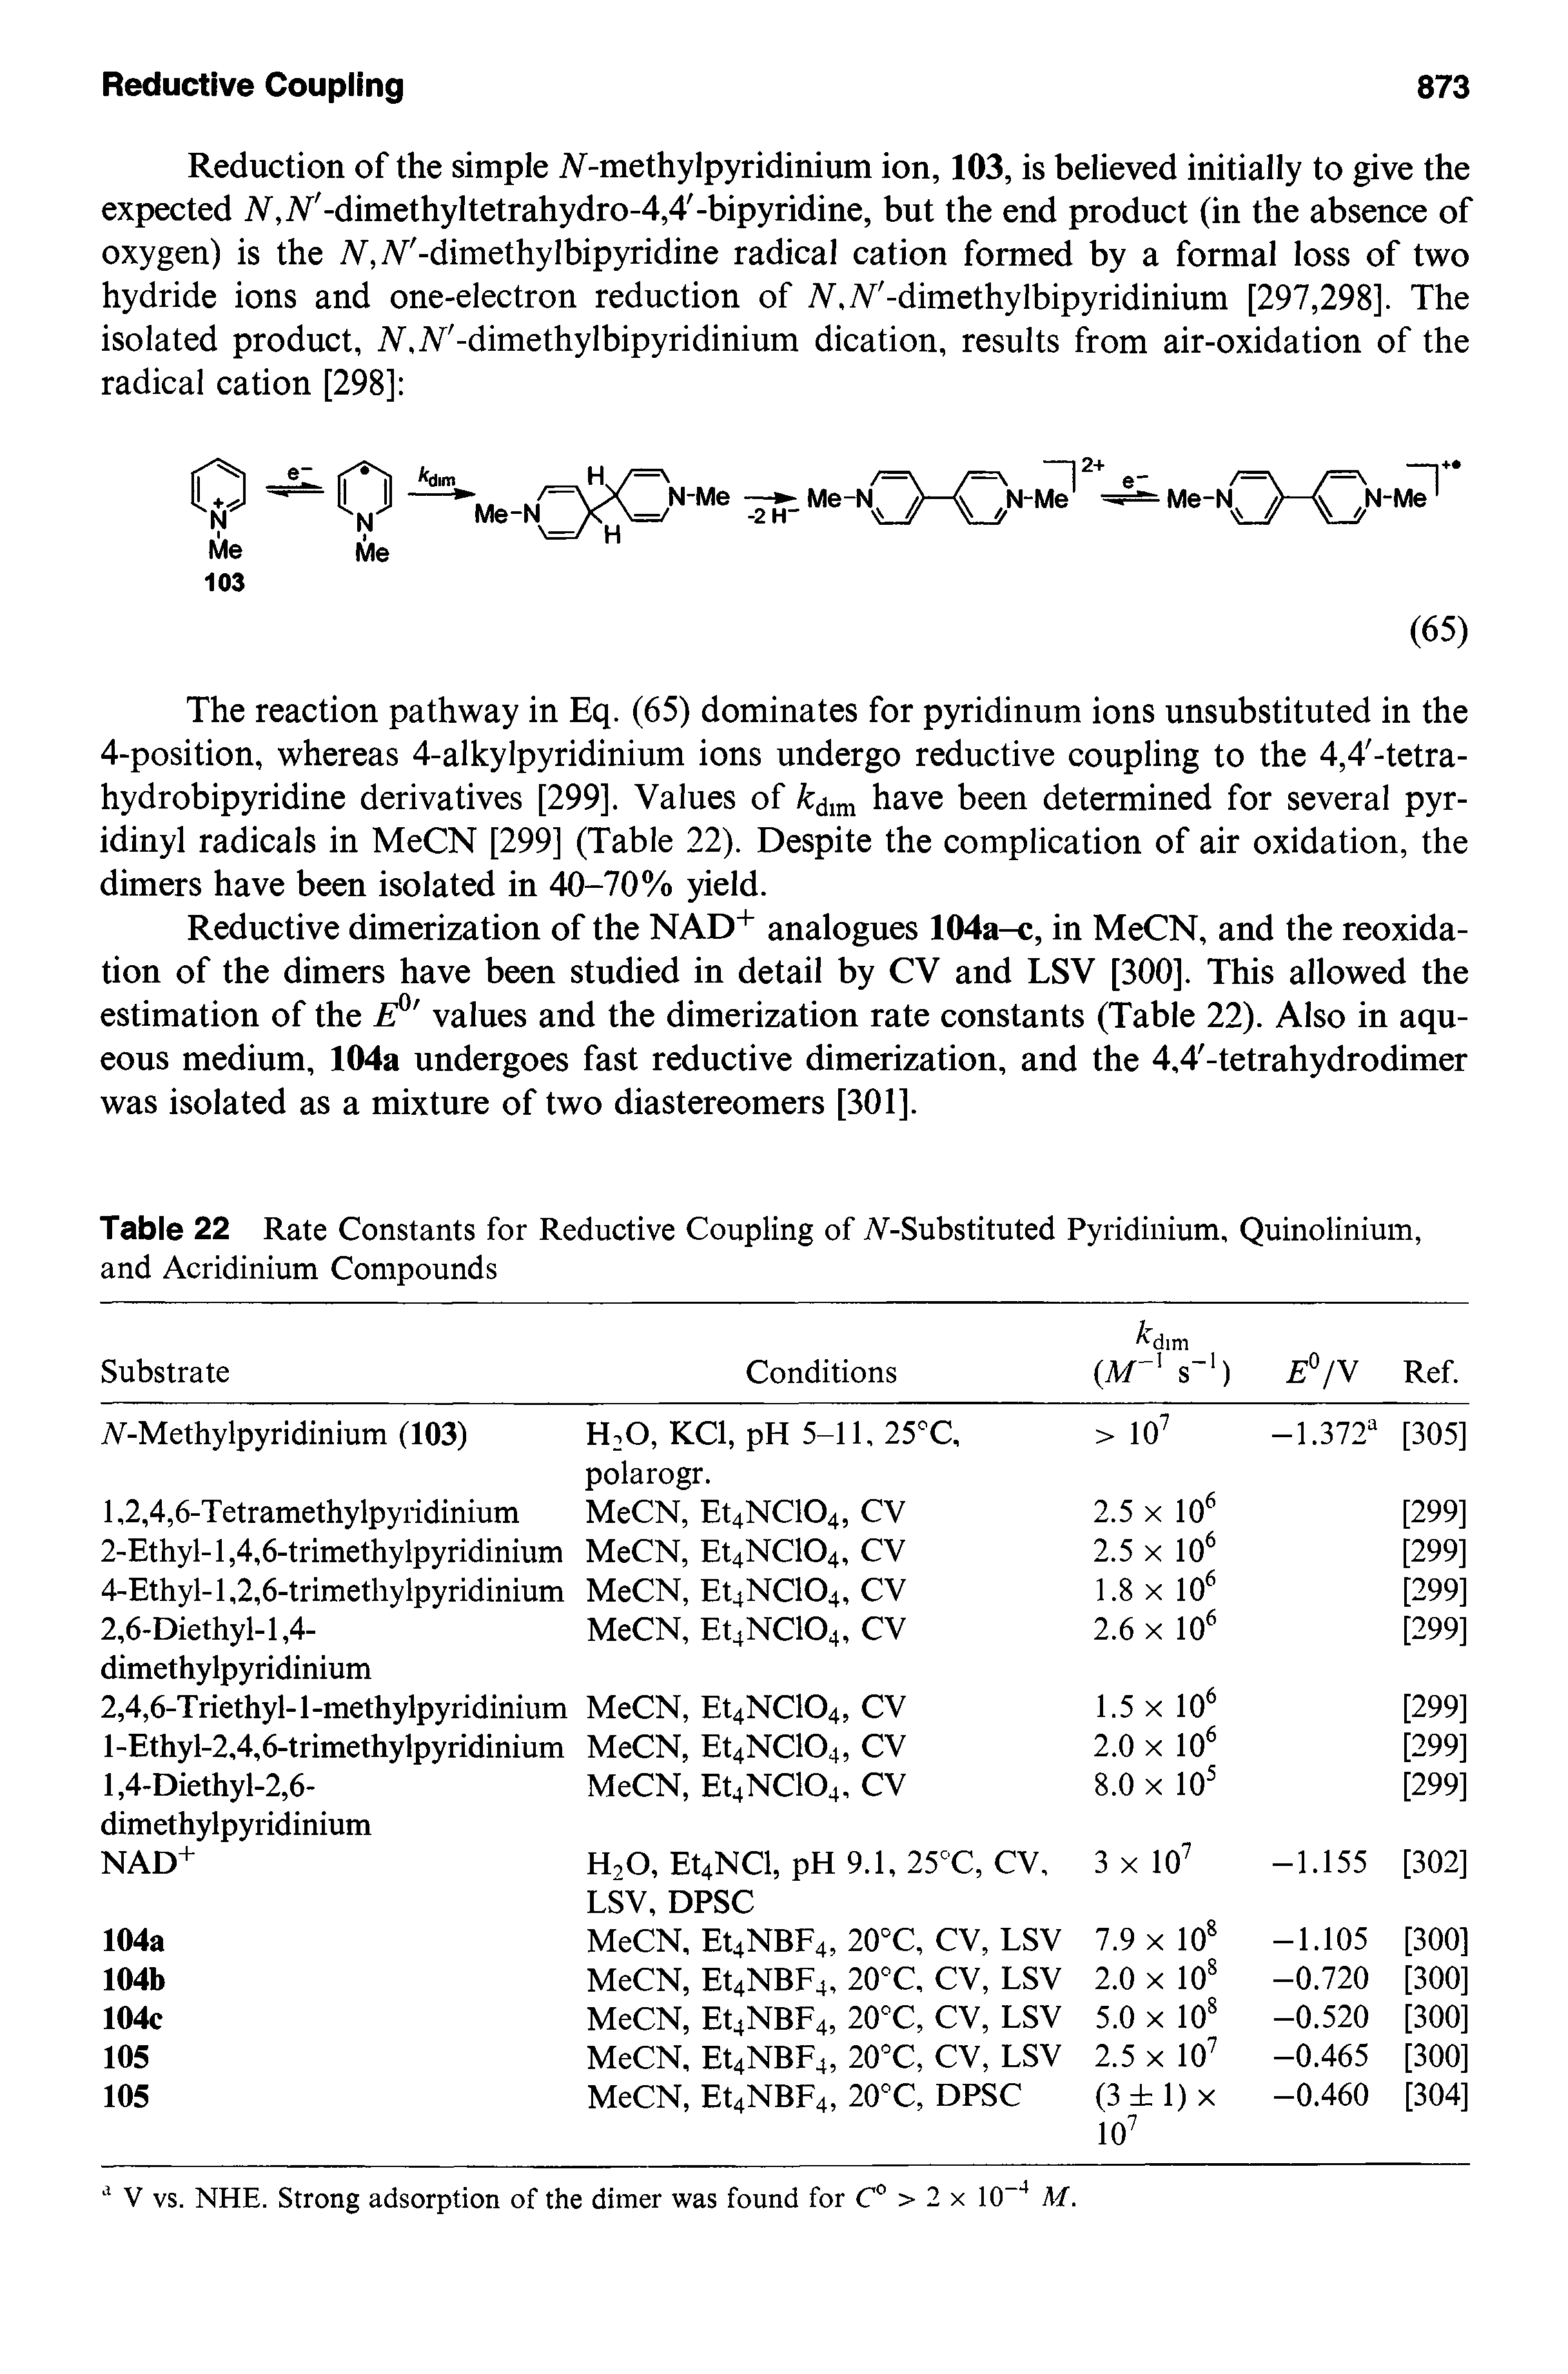 Table 22 Rate Constants for Reductive Coupling of A -Substituted Pyridinium, Quinolinium, and Acridinium Compounds...